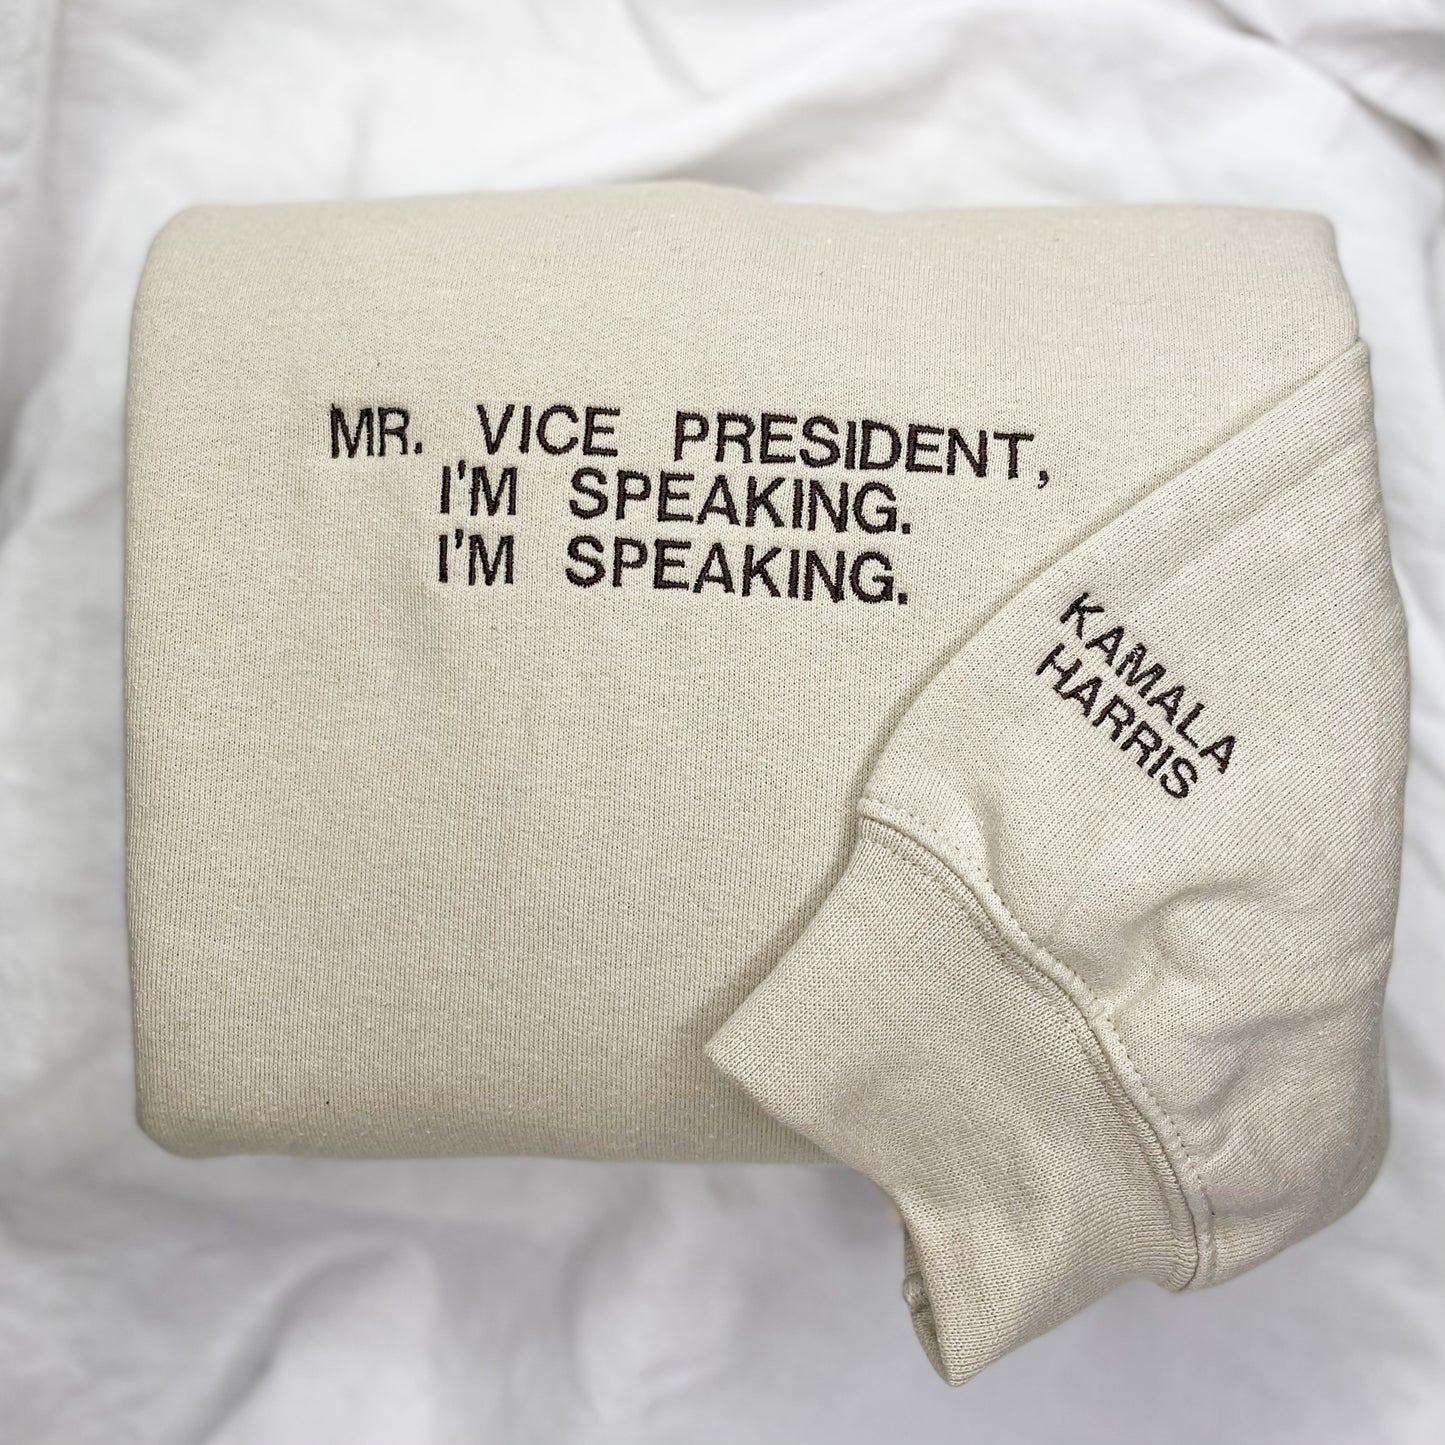 Kamala Harris "MR. VICE PRESIDENT, I'M SPEAKING. I'M SPEAKING." Embroidered Crewneck